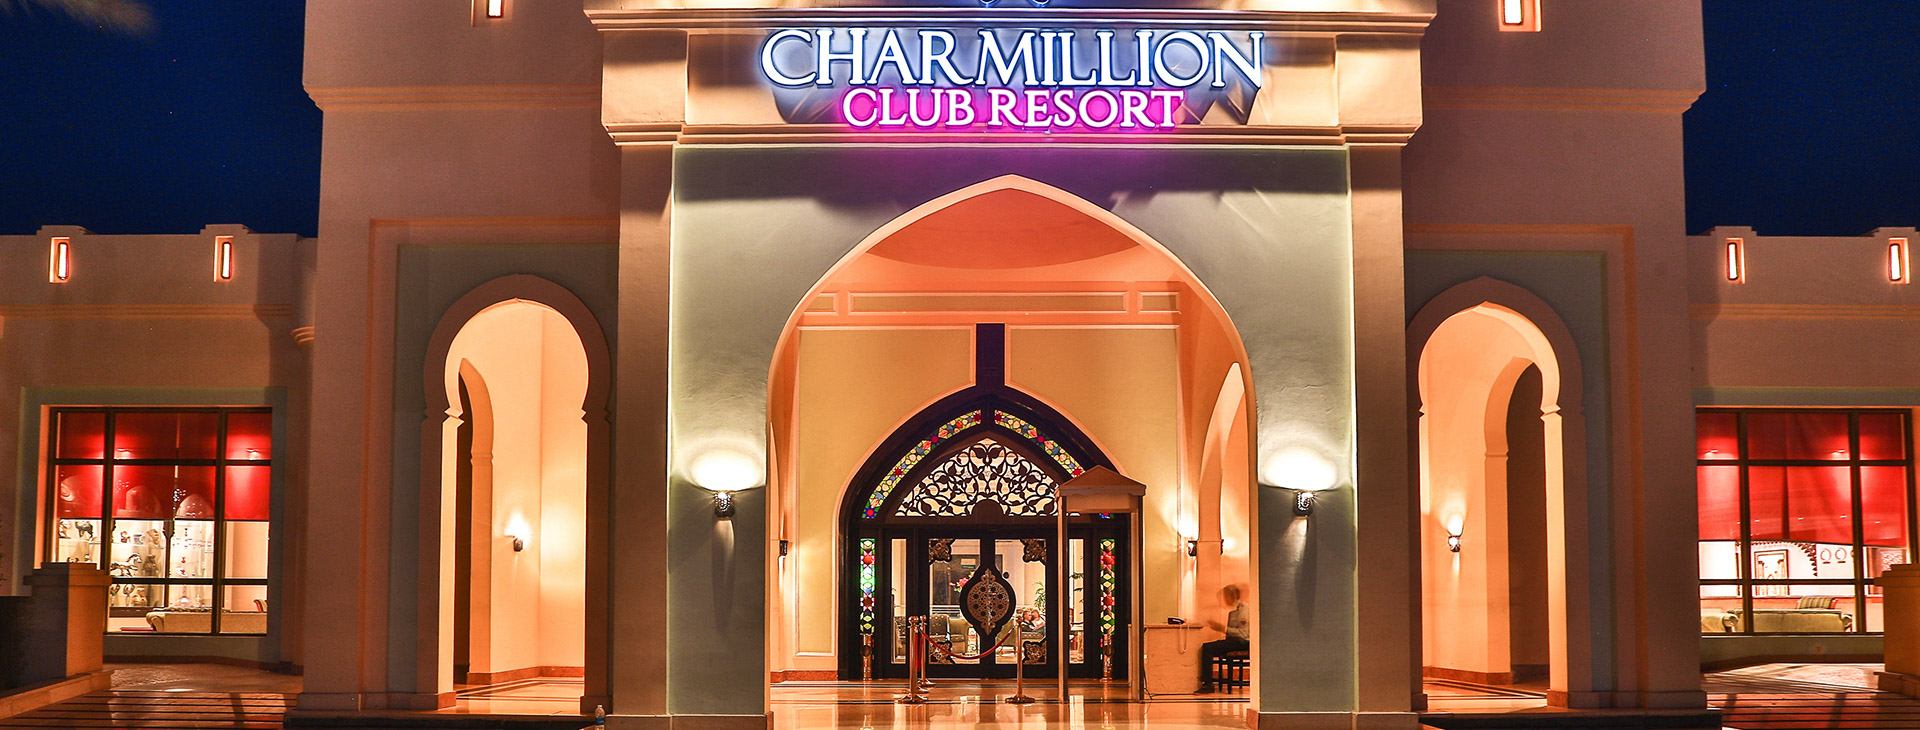 Charmillion Club Resort Obrázek11